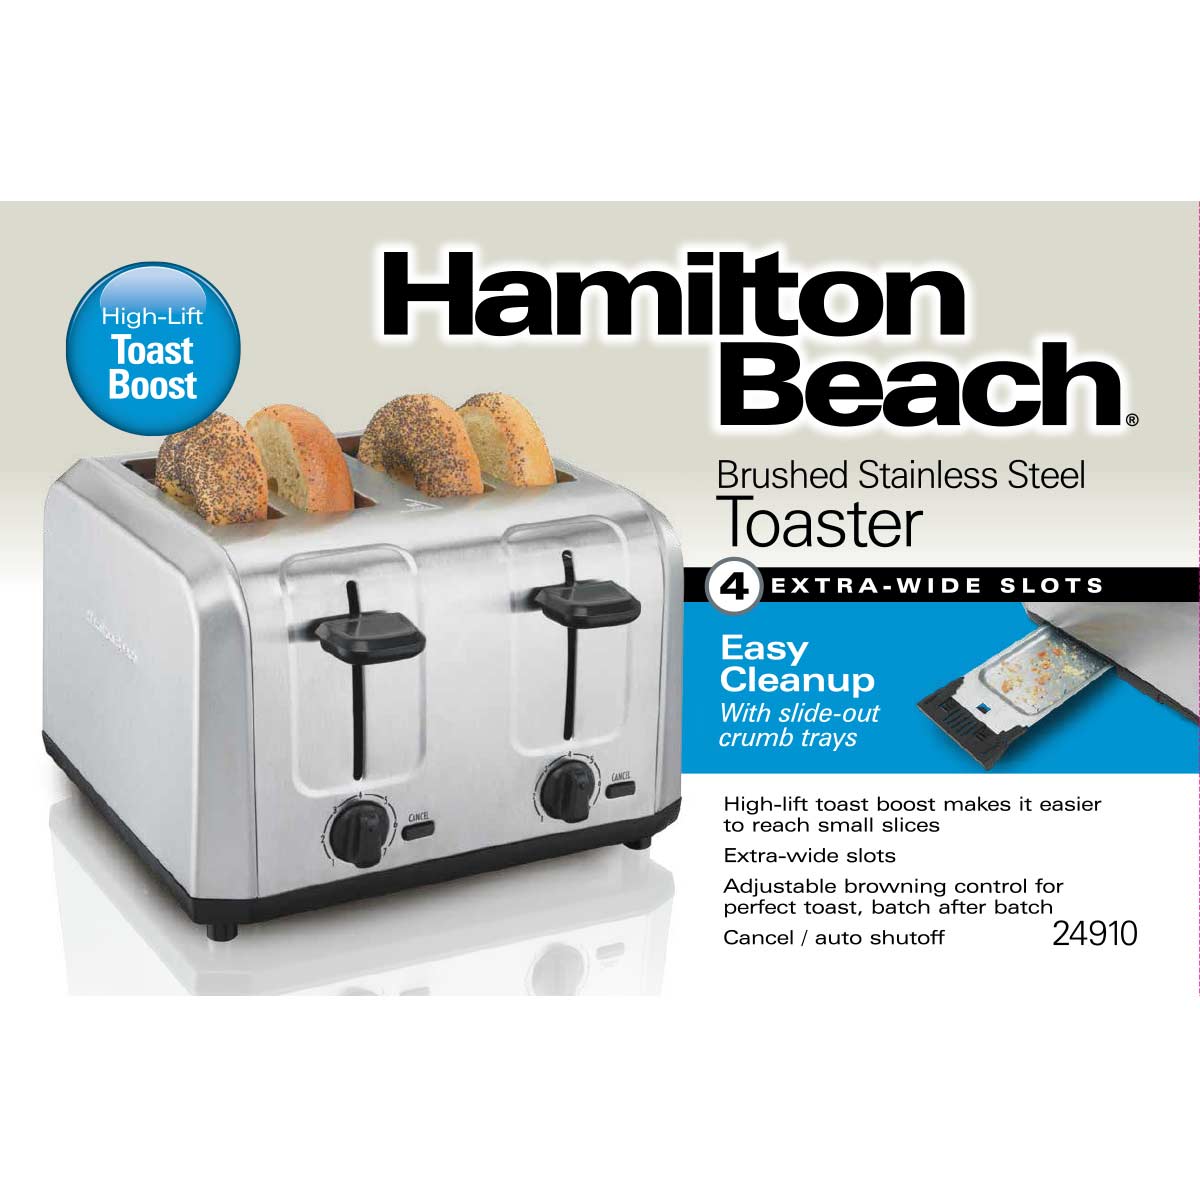 Hamilton Beach 24910 Brushed Stainless Steel Toaster, 4-Slice